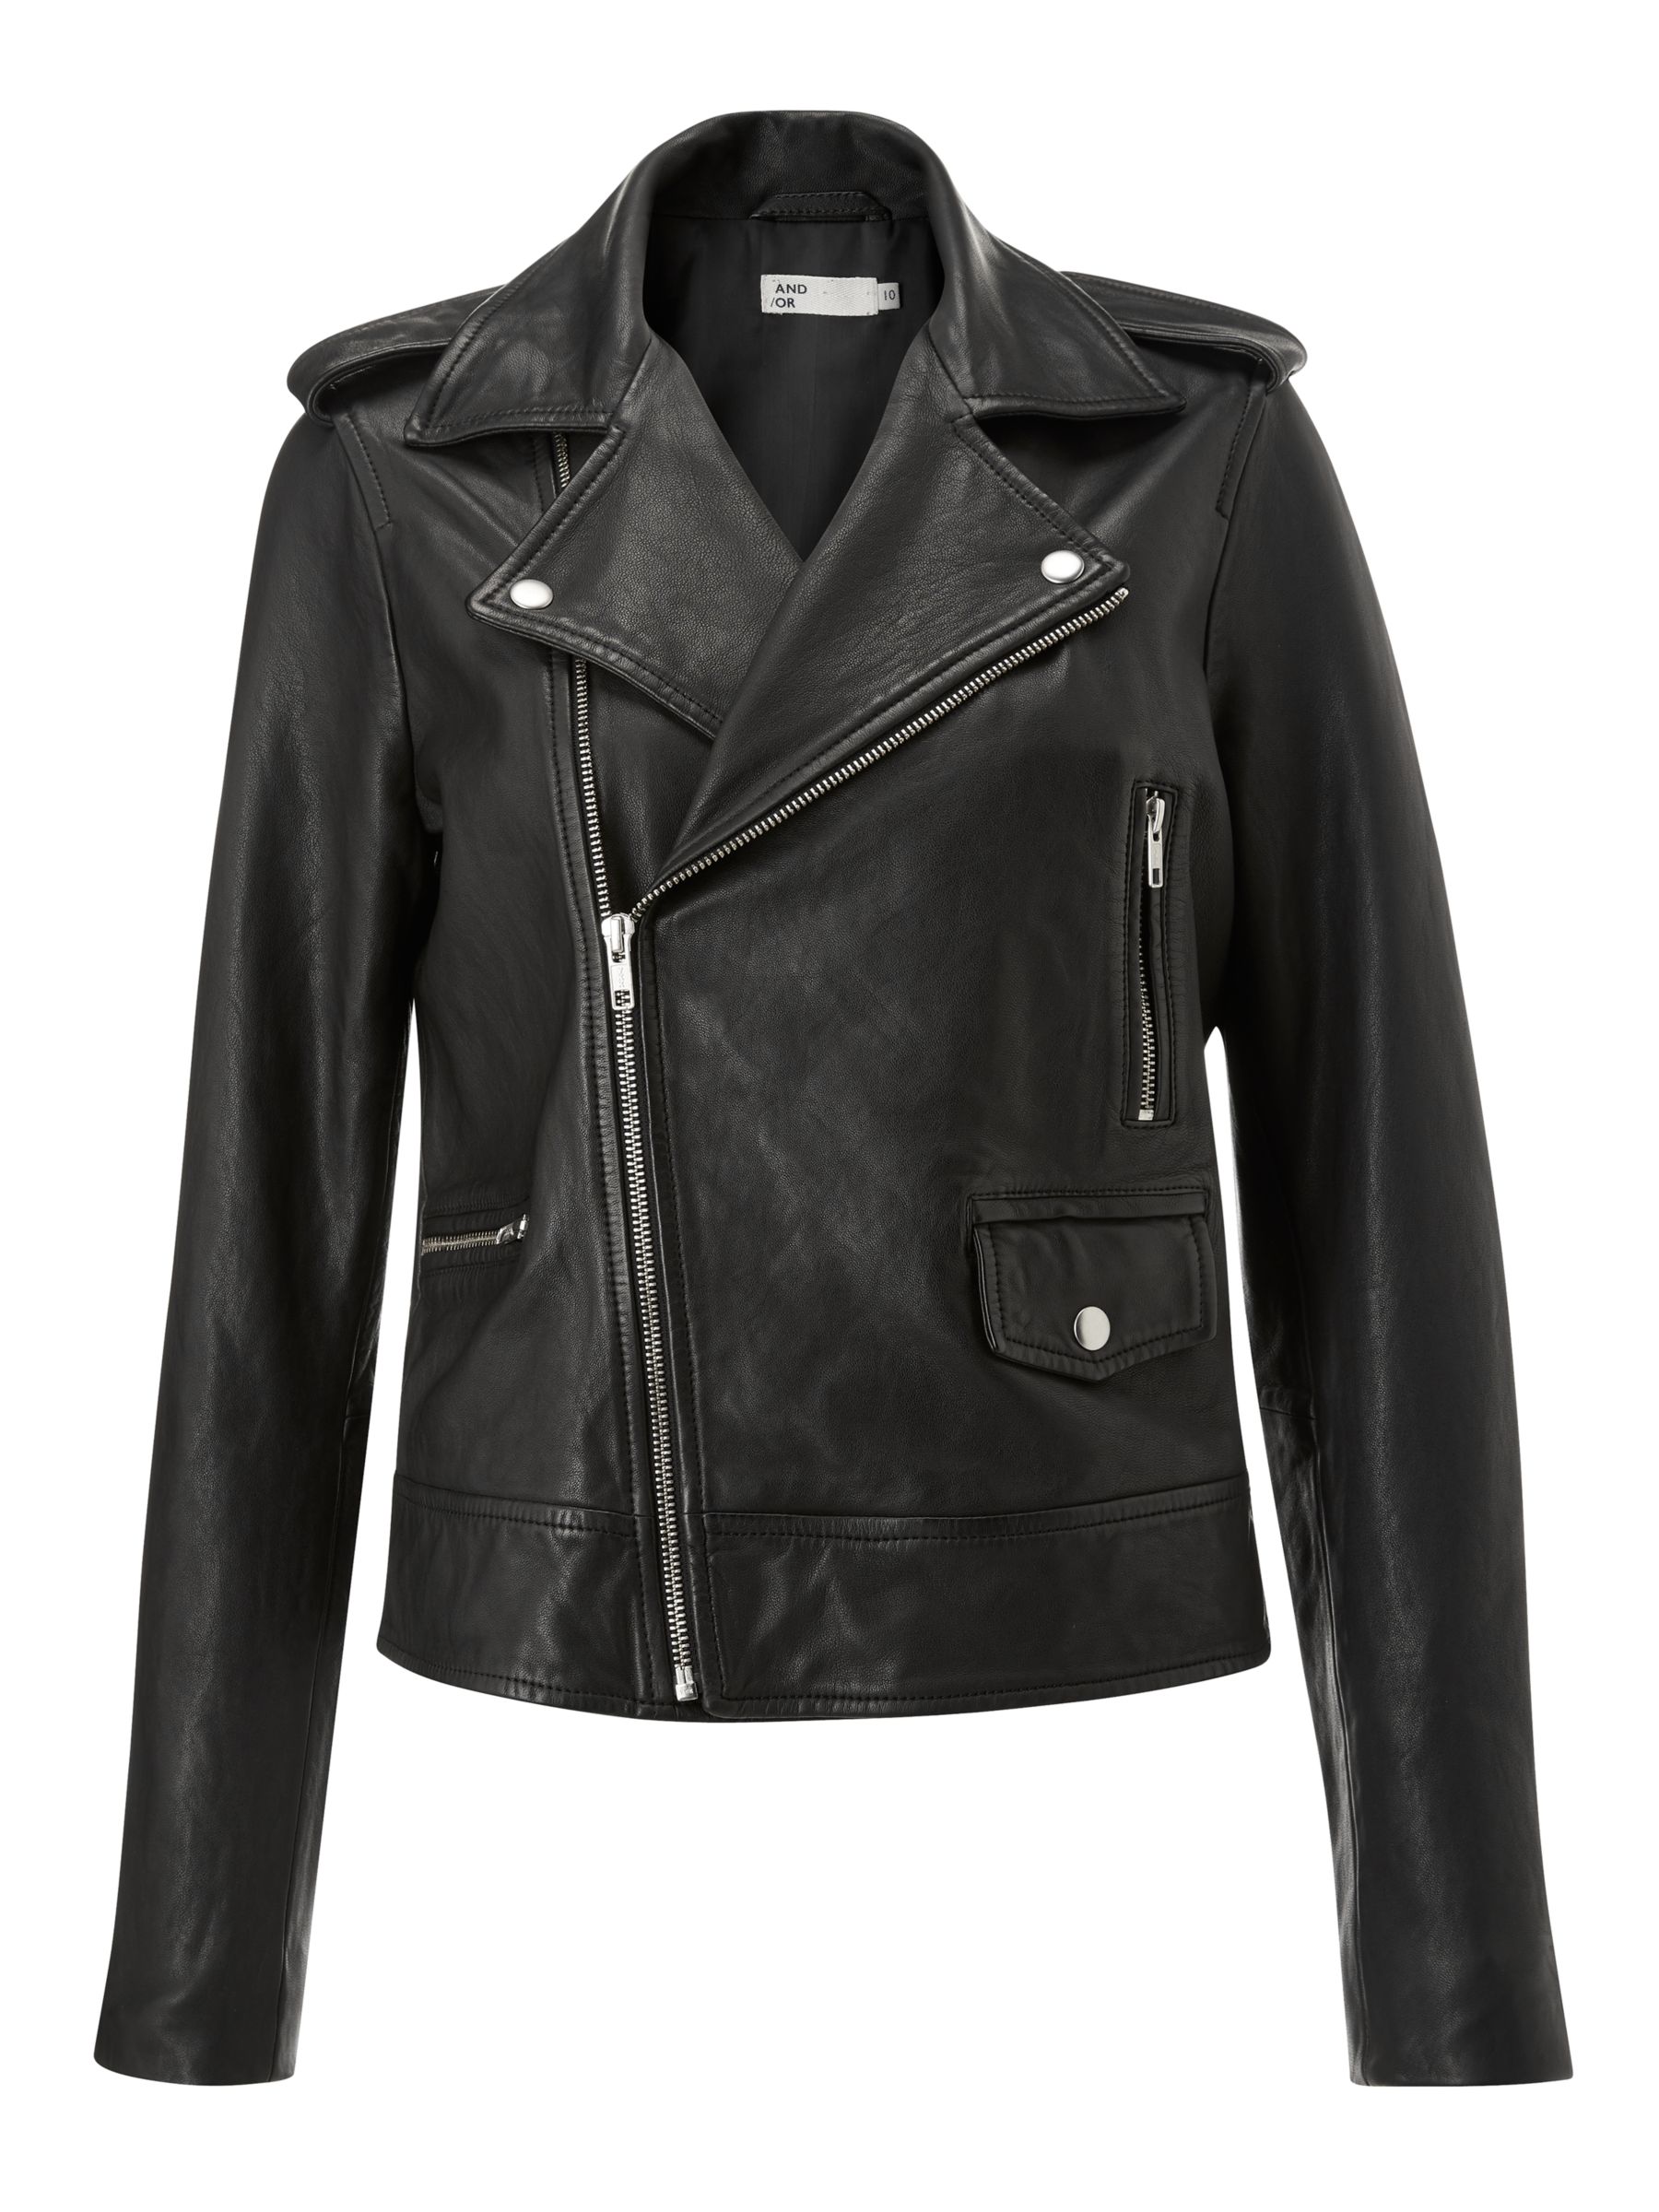 AND/OR Leather Biker Jacket, Black at John Lewis & Partners